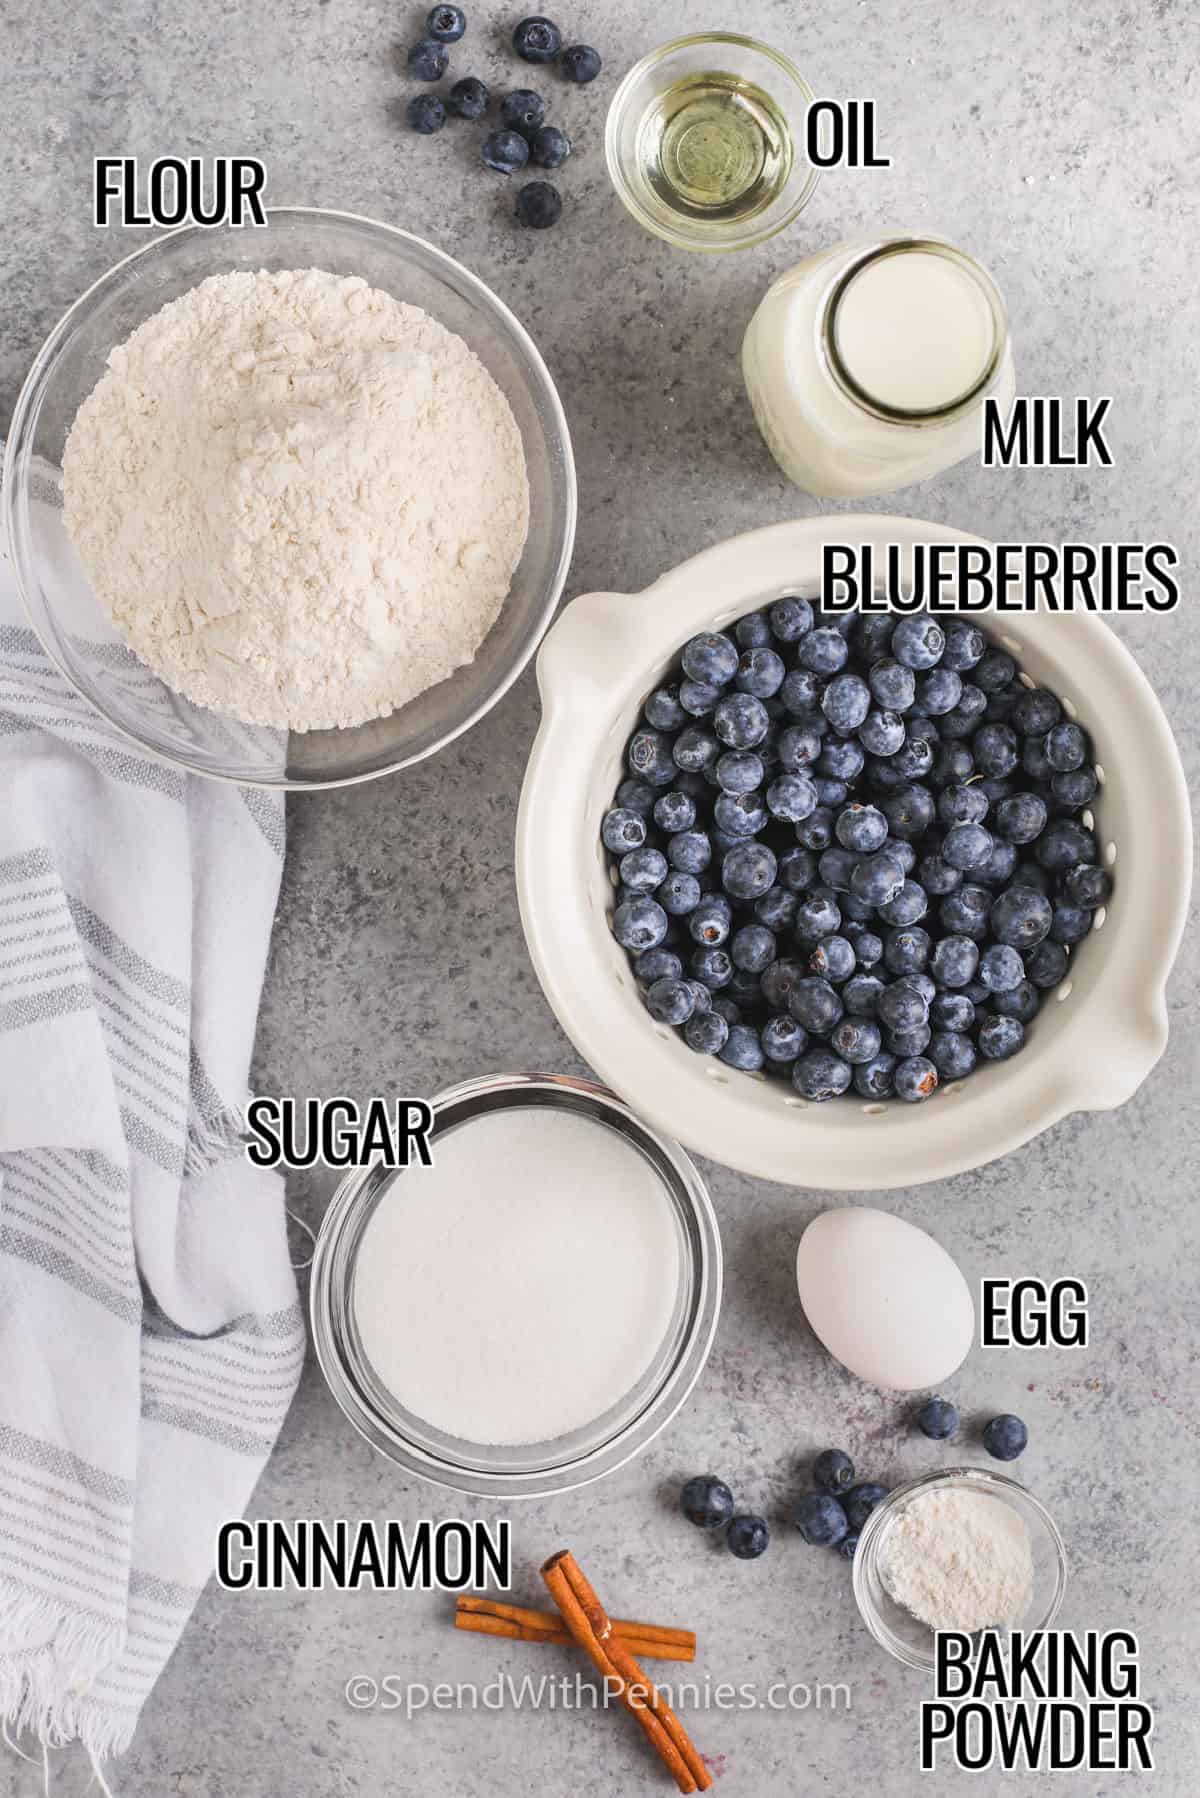 blueberries, sugar, flour, milk, and ingredients to make Blueberry Cobbler